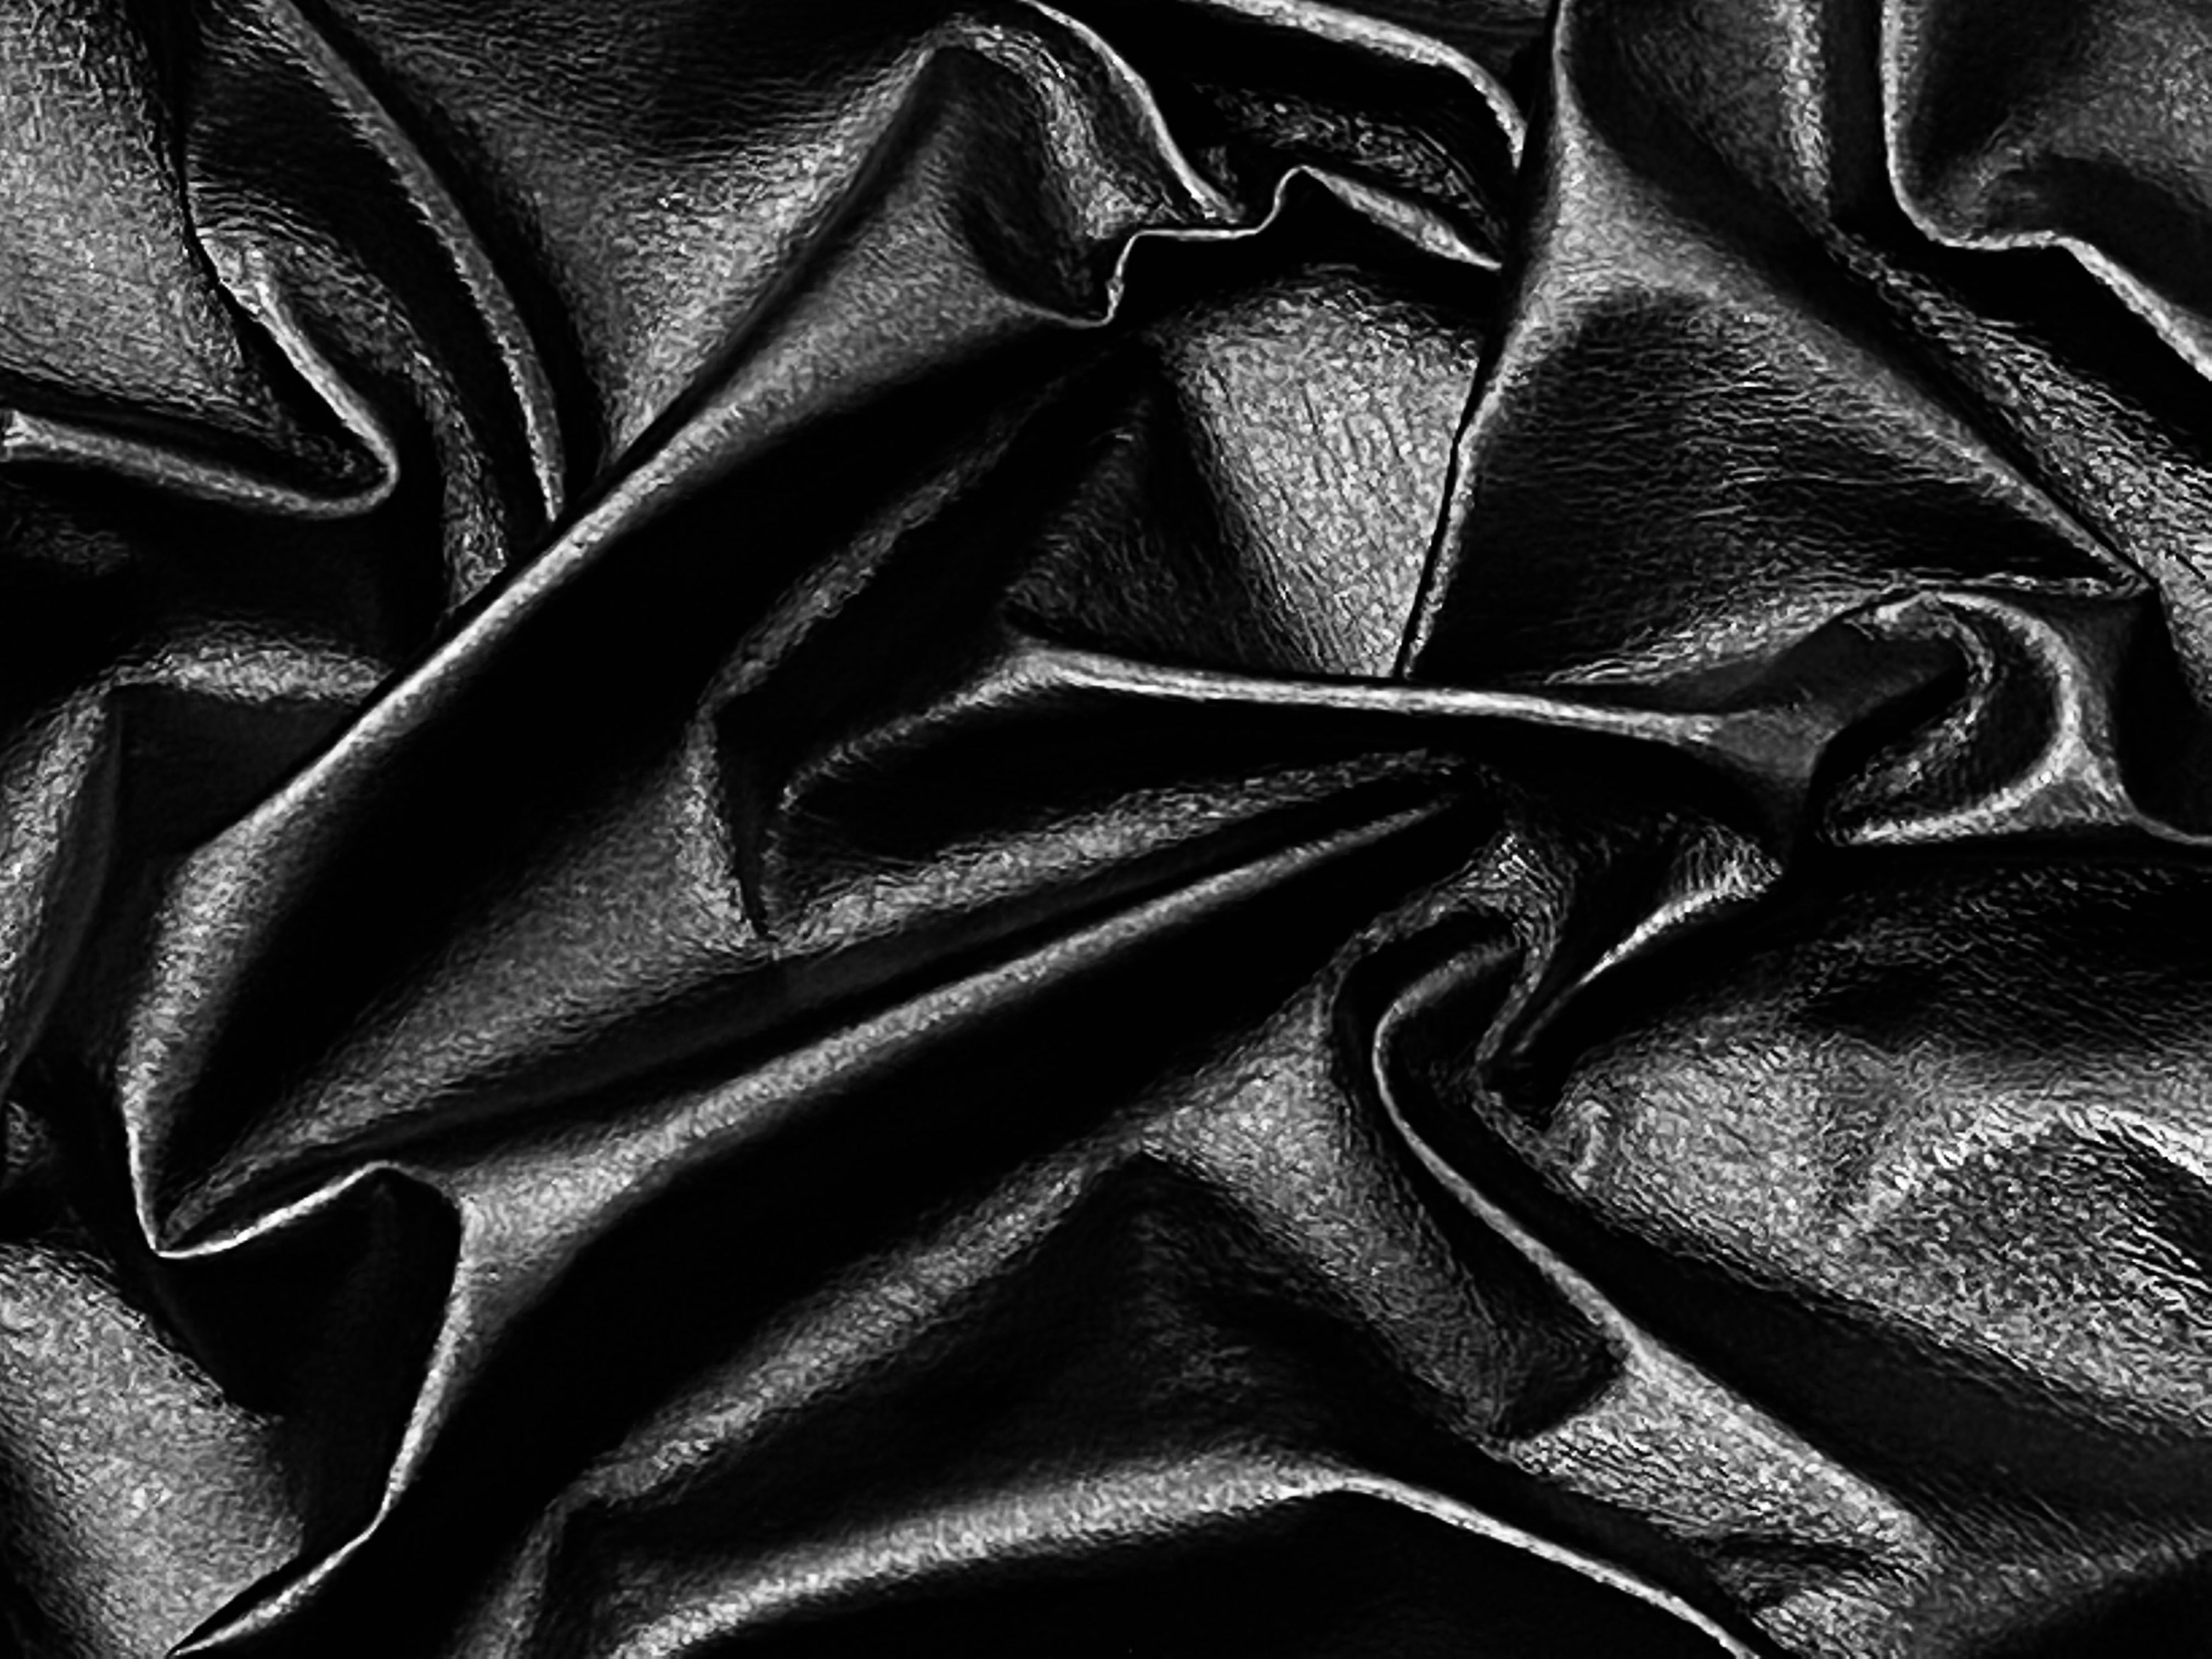 Black, Metallic Foiled Leather Pig Skin : (0.6-0.7mm 1.5oz) 15